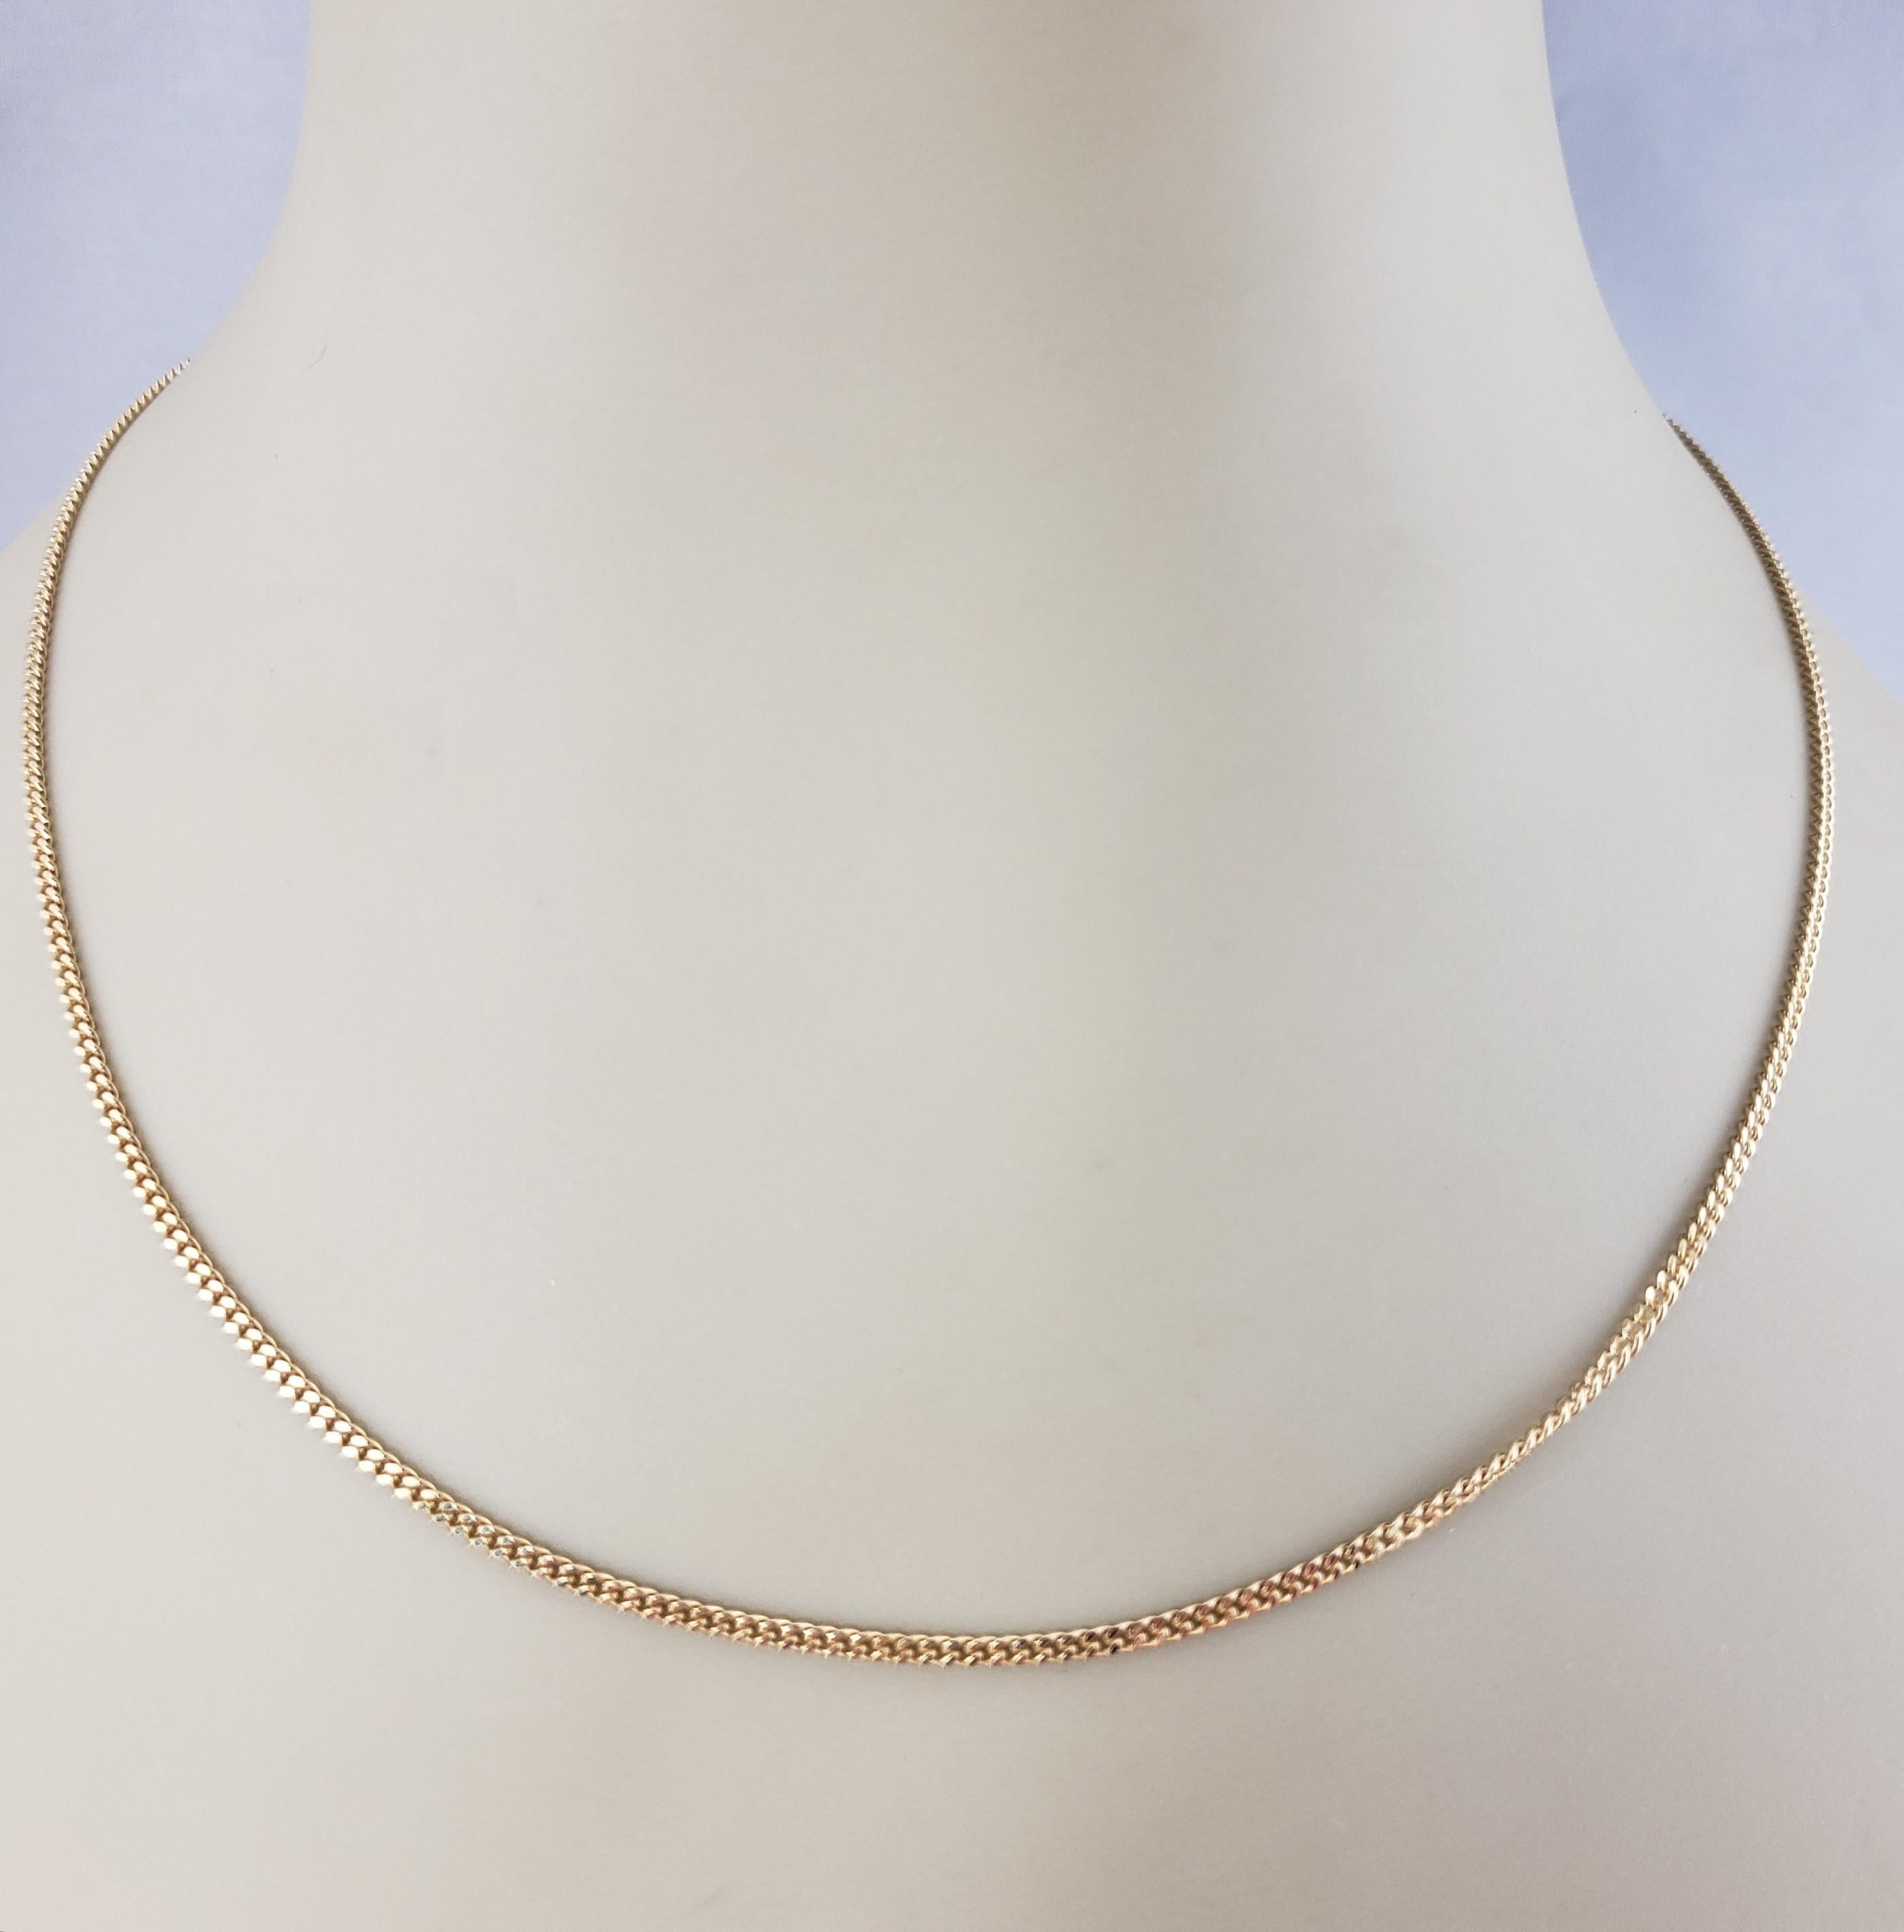  18 Karat Yellow Gold Link Chain Necklace #15608 4